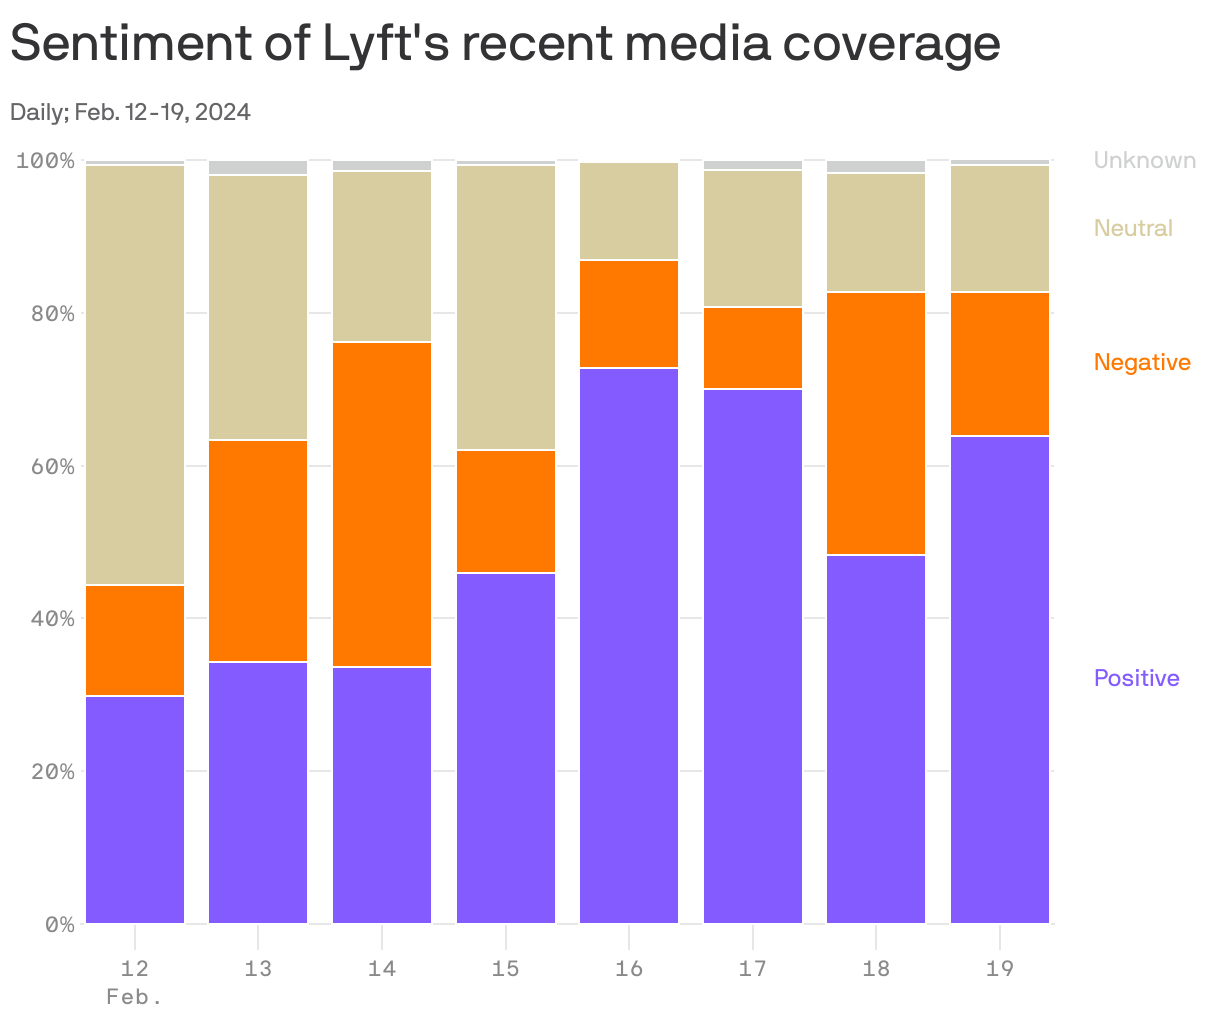 Sentiment of Lyft's recent media coverage